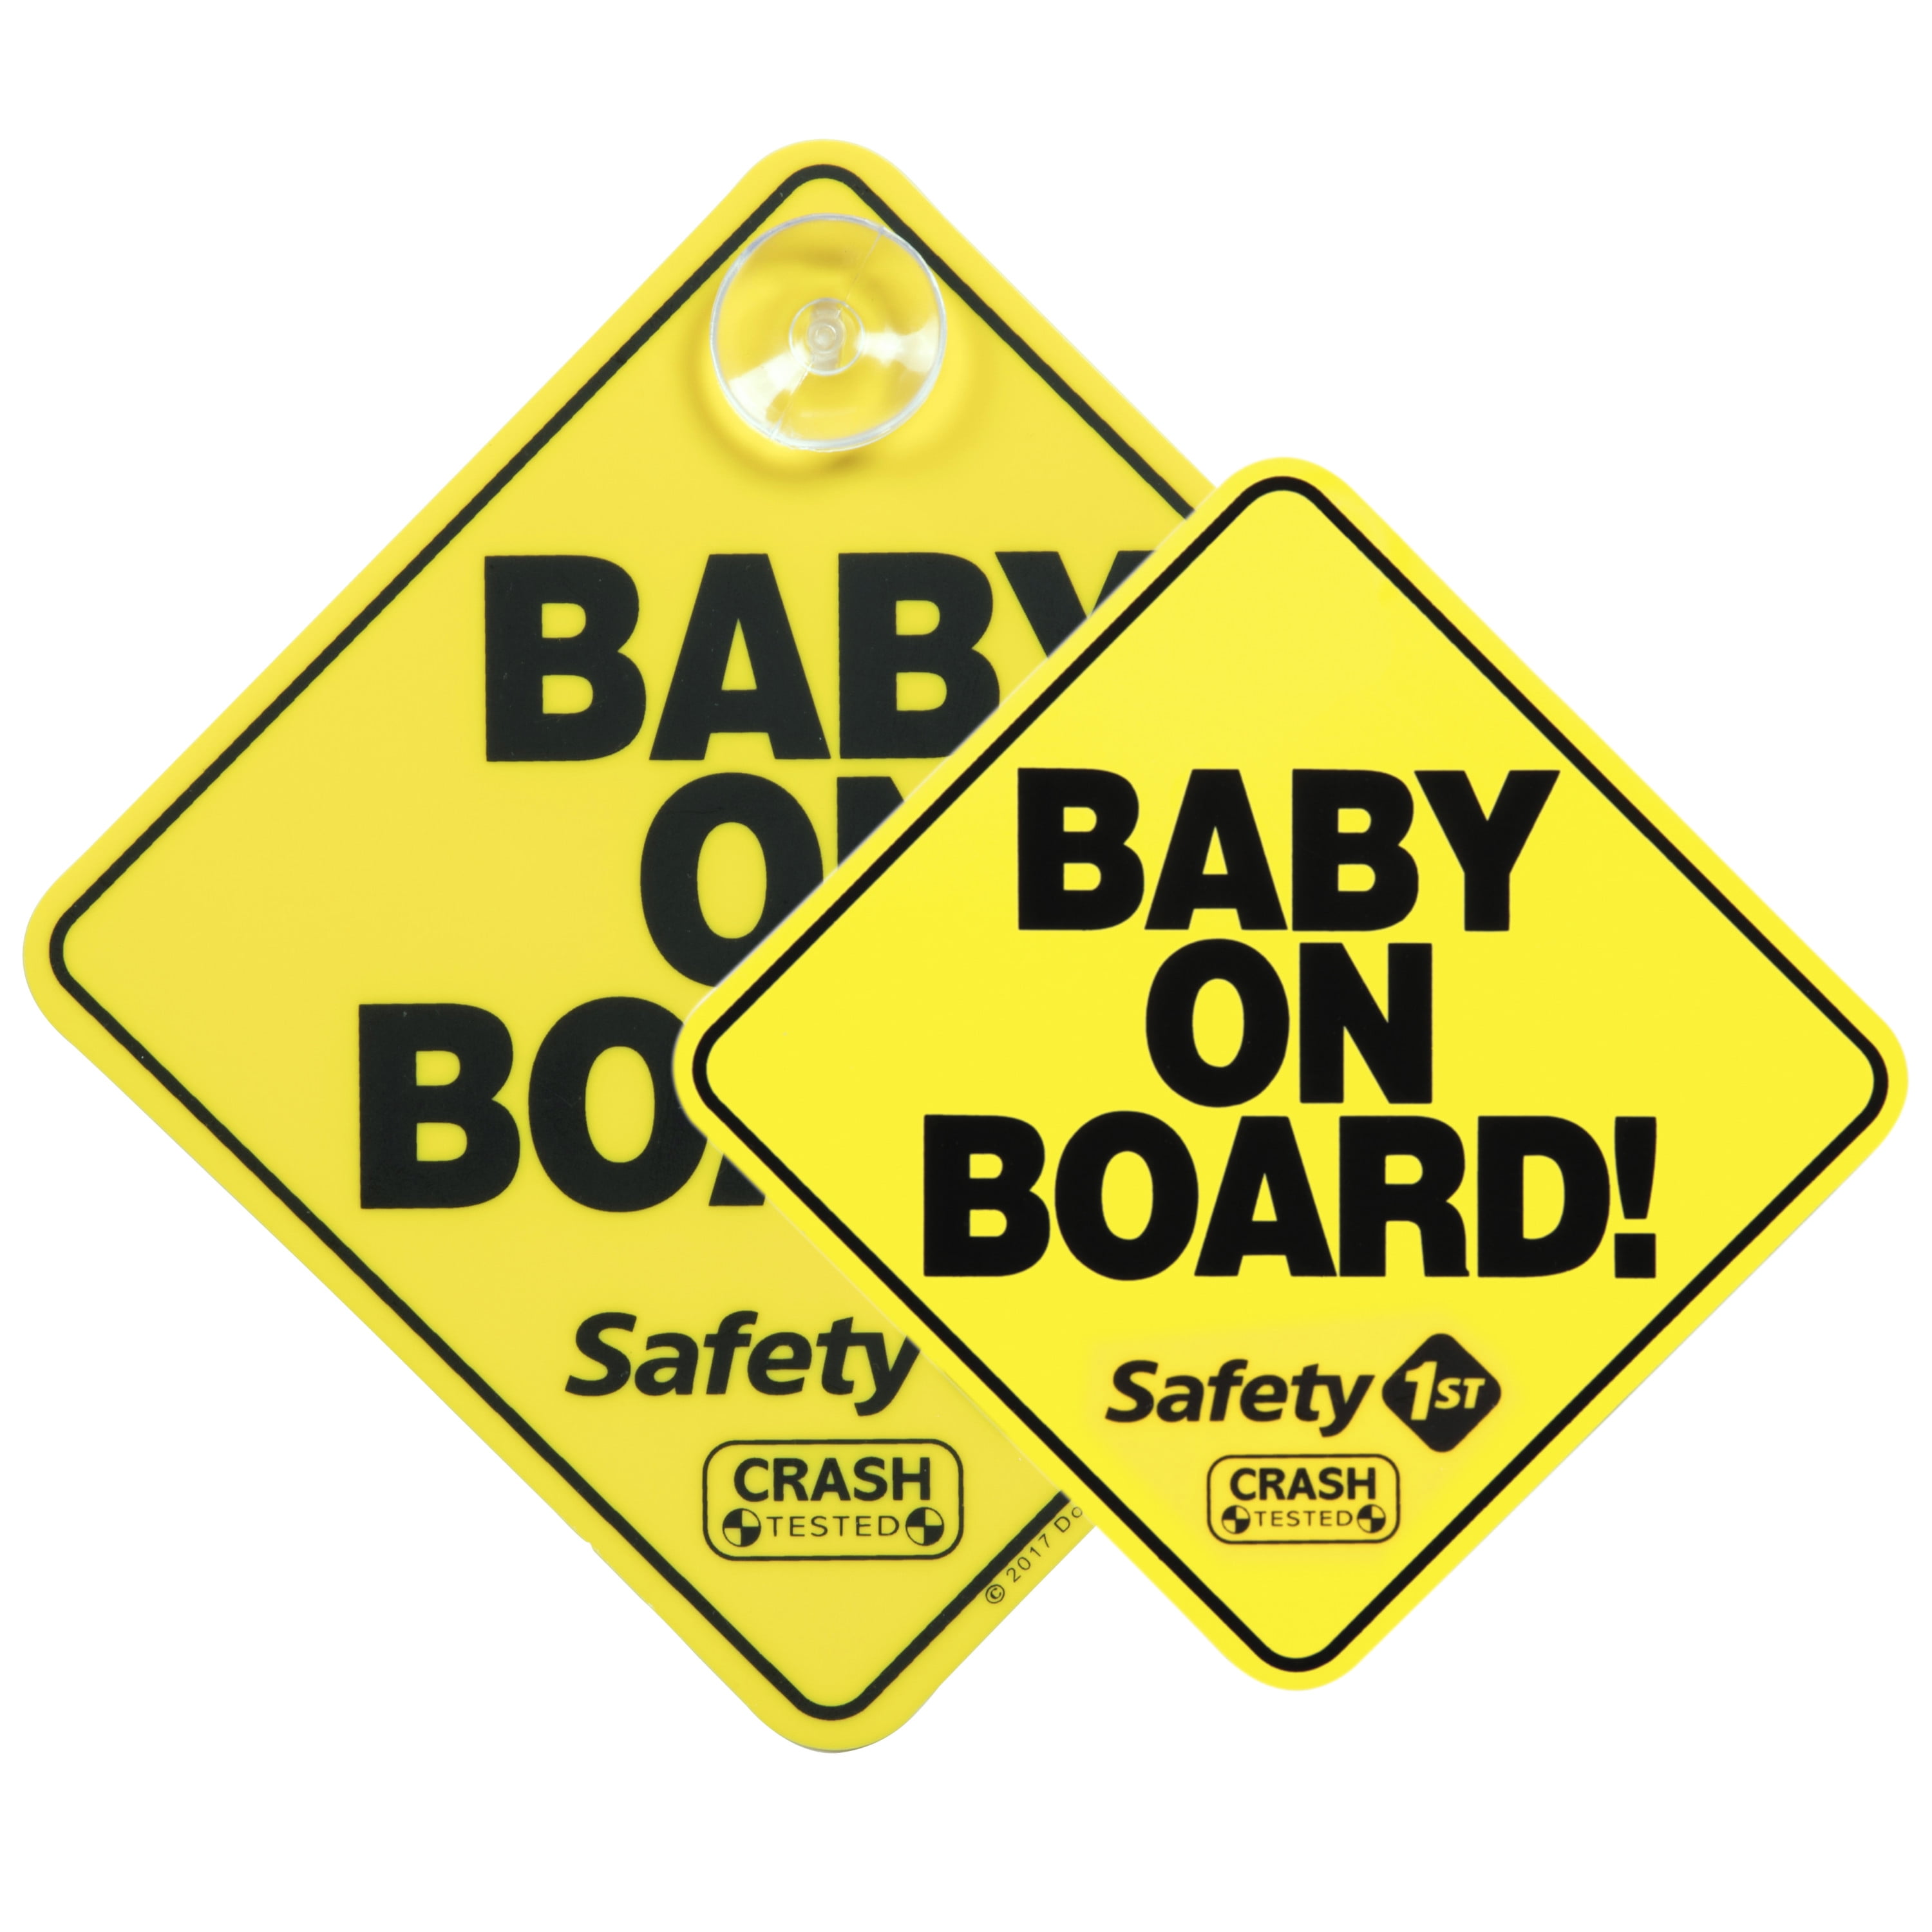 Origin of 'Baby on Board' Signs